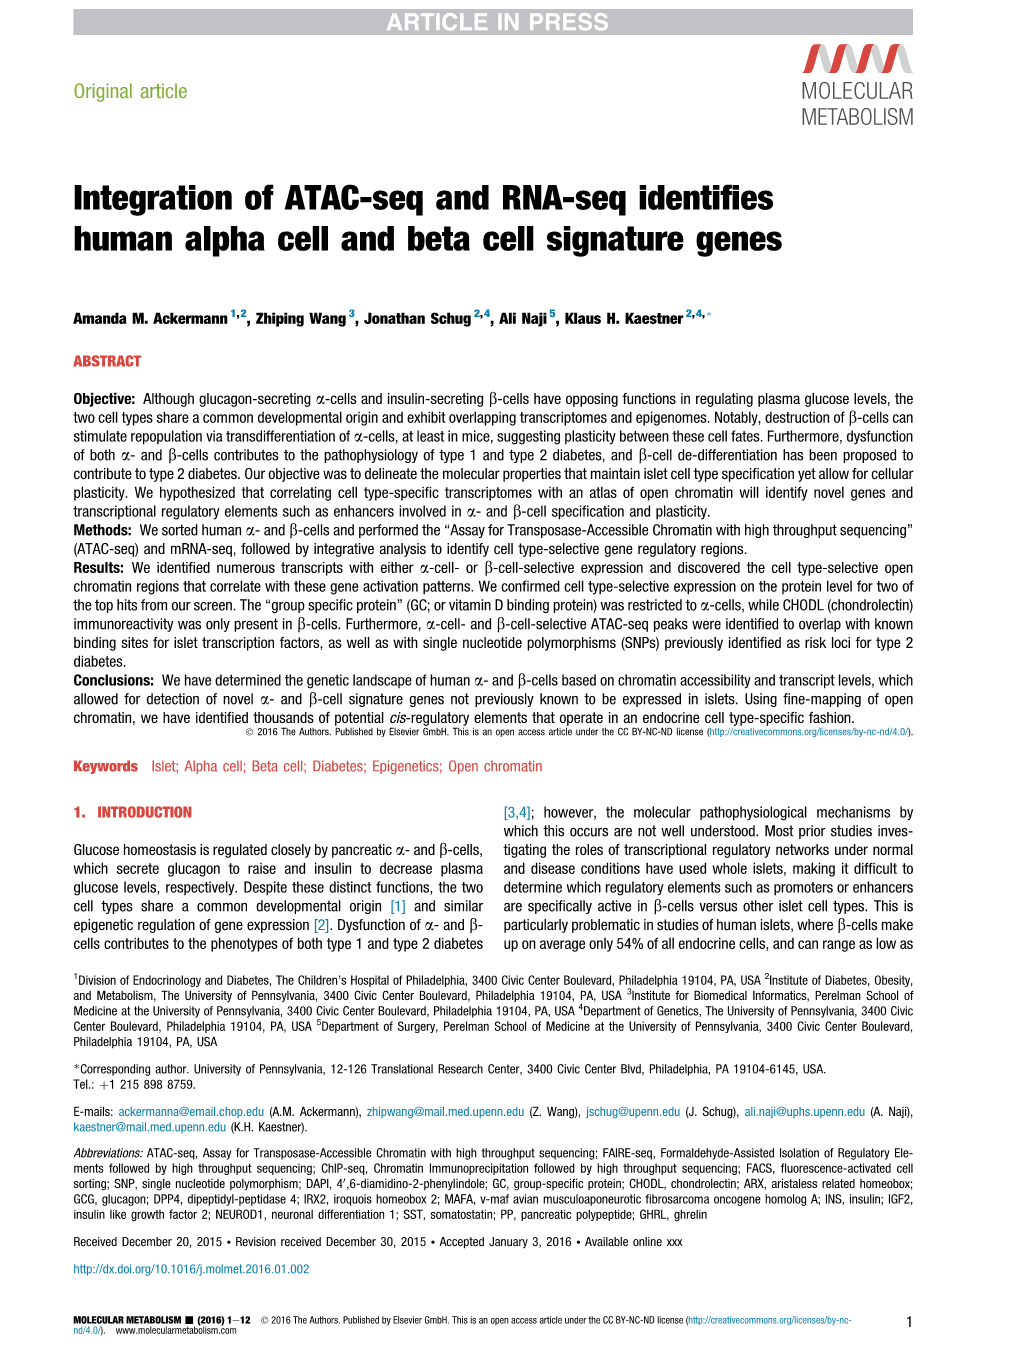 Integration of ATAC-Seq and RNA-Seq Identifies Human Alpha